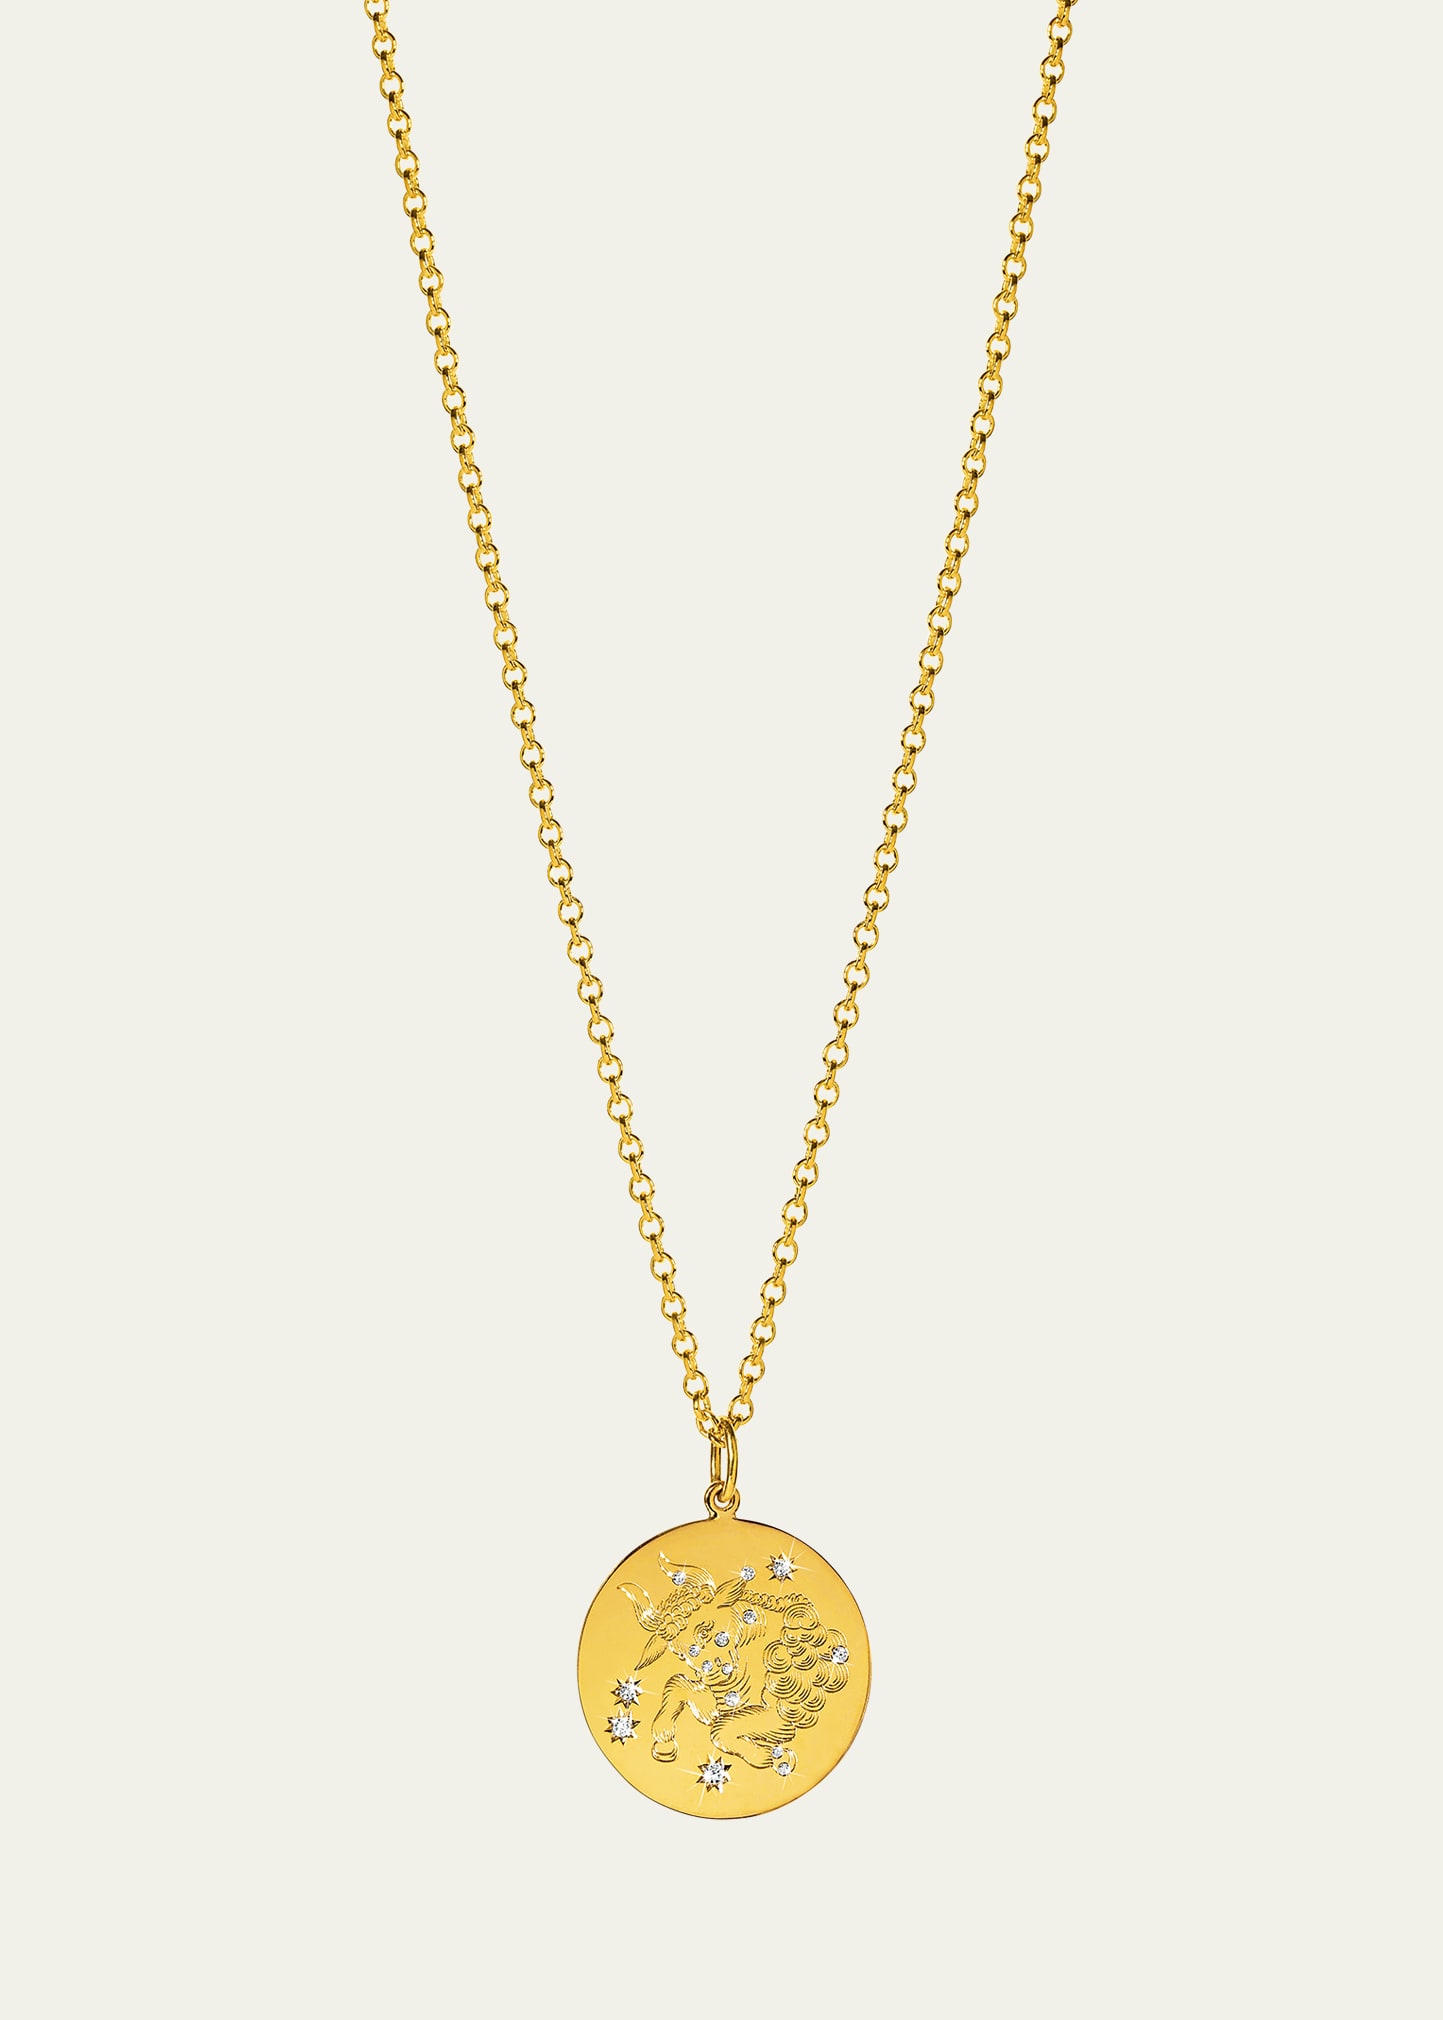 18K Yellow Gold Taurus Zodiac Pendant Necklace with Diamonds